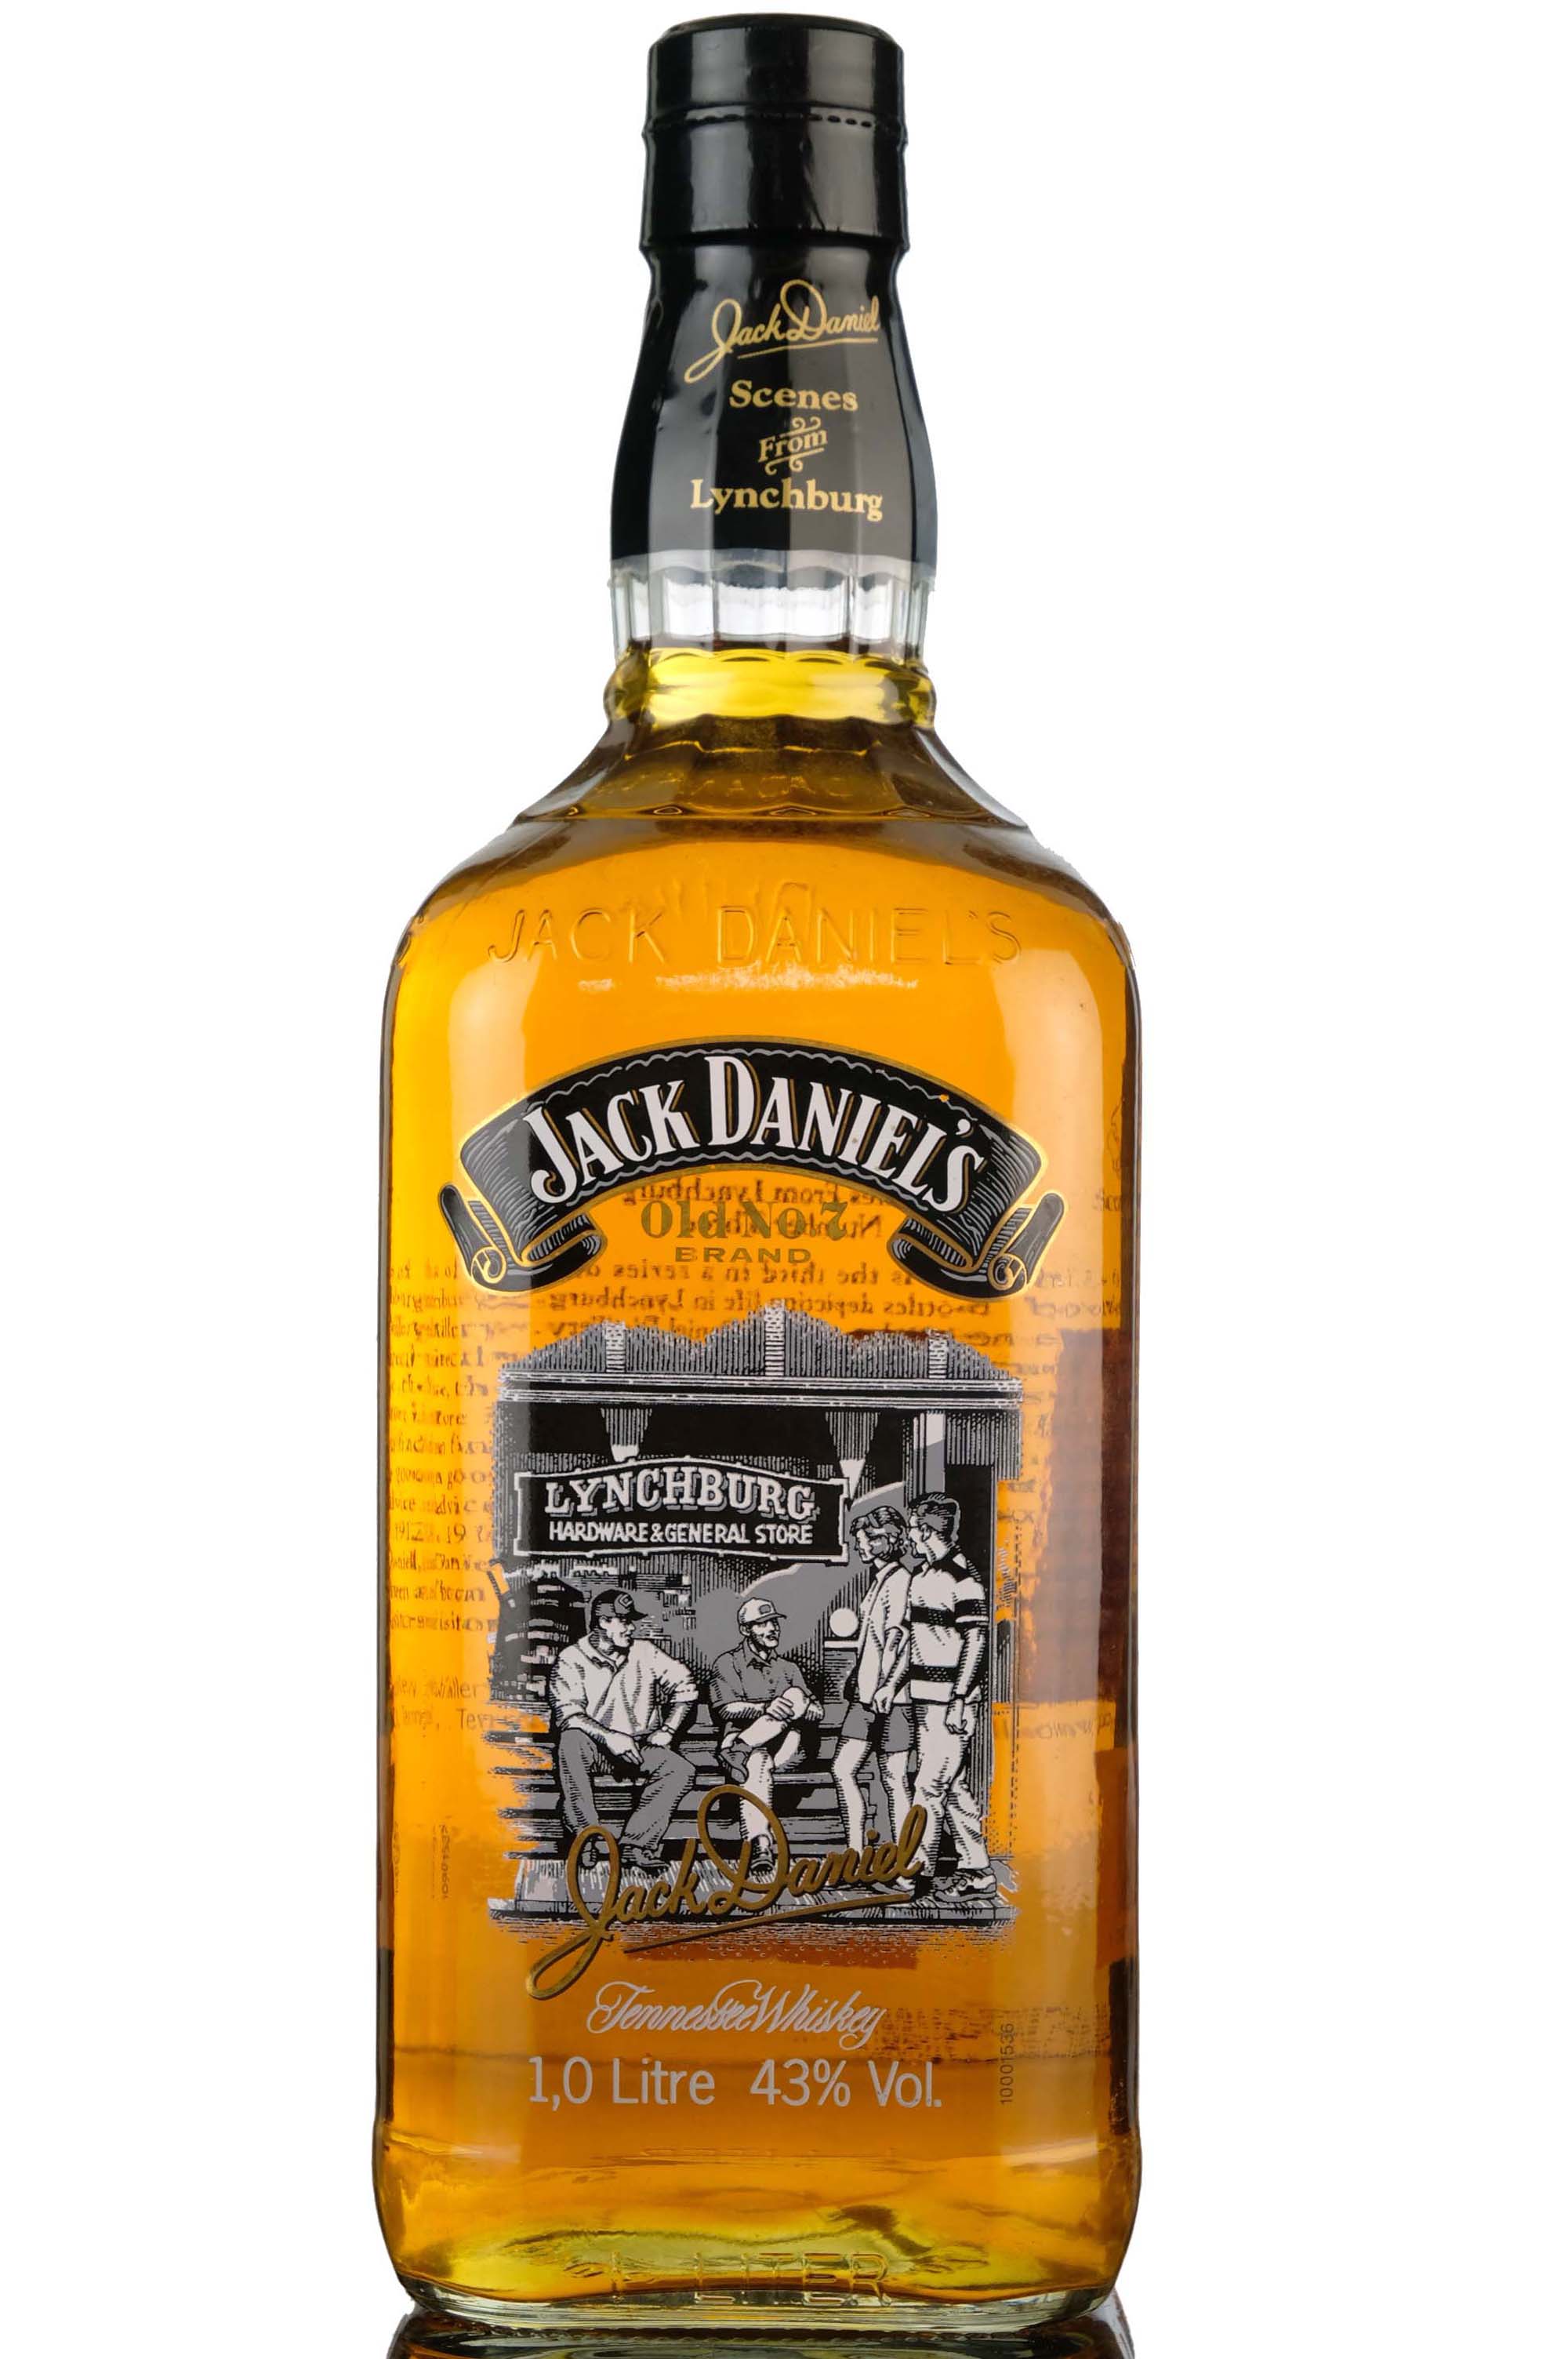 Jack Daniels Scenes From Lynchburg No3 - 1 Litre